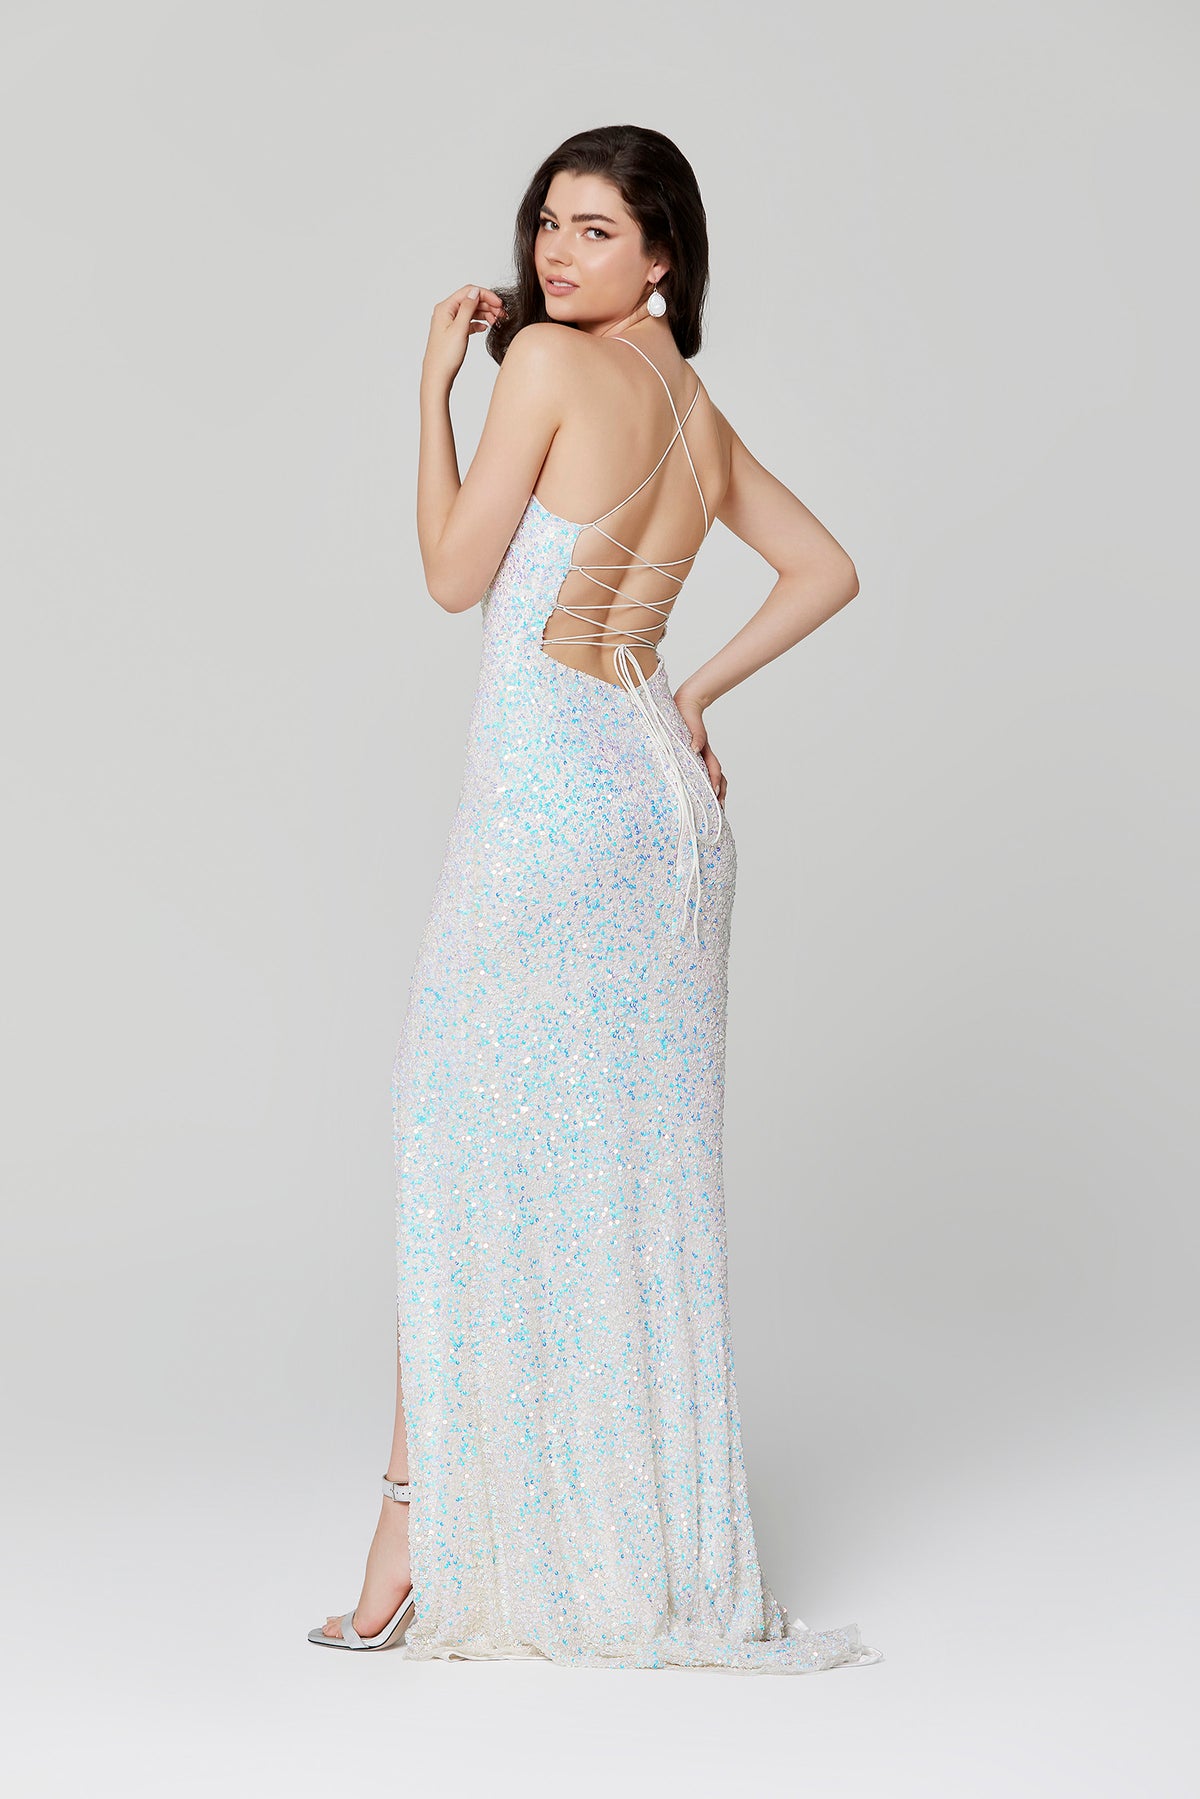 Primavera - 3290 - Sequinned High-Slit Prom Dress